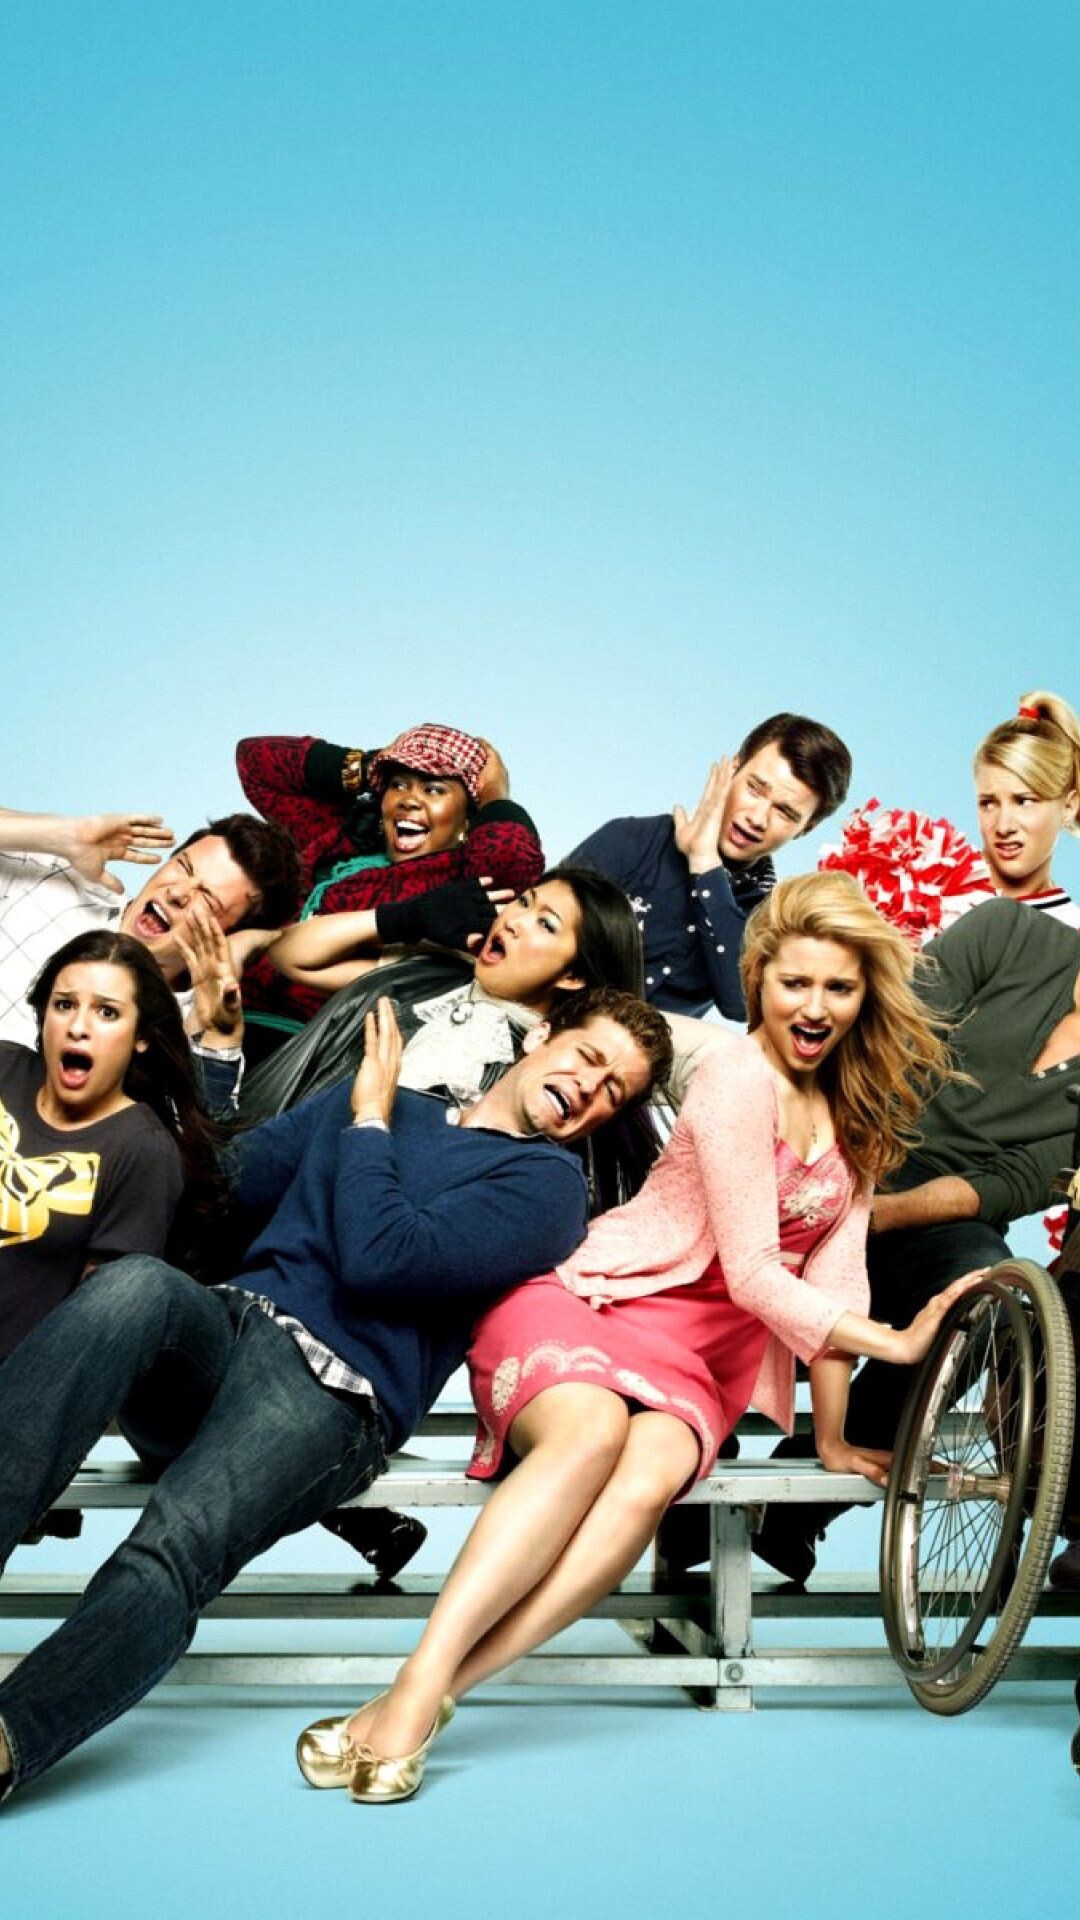 Glee (TV series): Lea Michele as Rachel Berry, Heather Morris as Brittany Pierce, Amber Riley as Mercedes Jones. 1080x1920 Full HD Background.